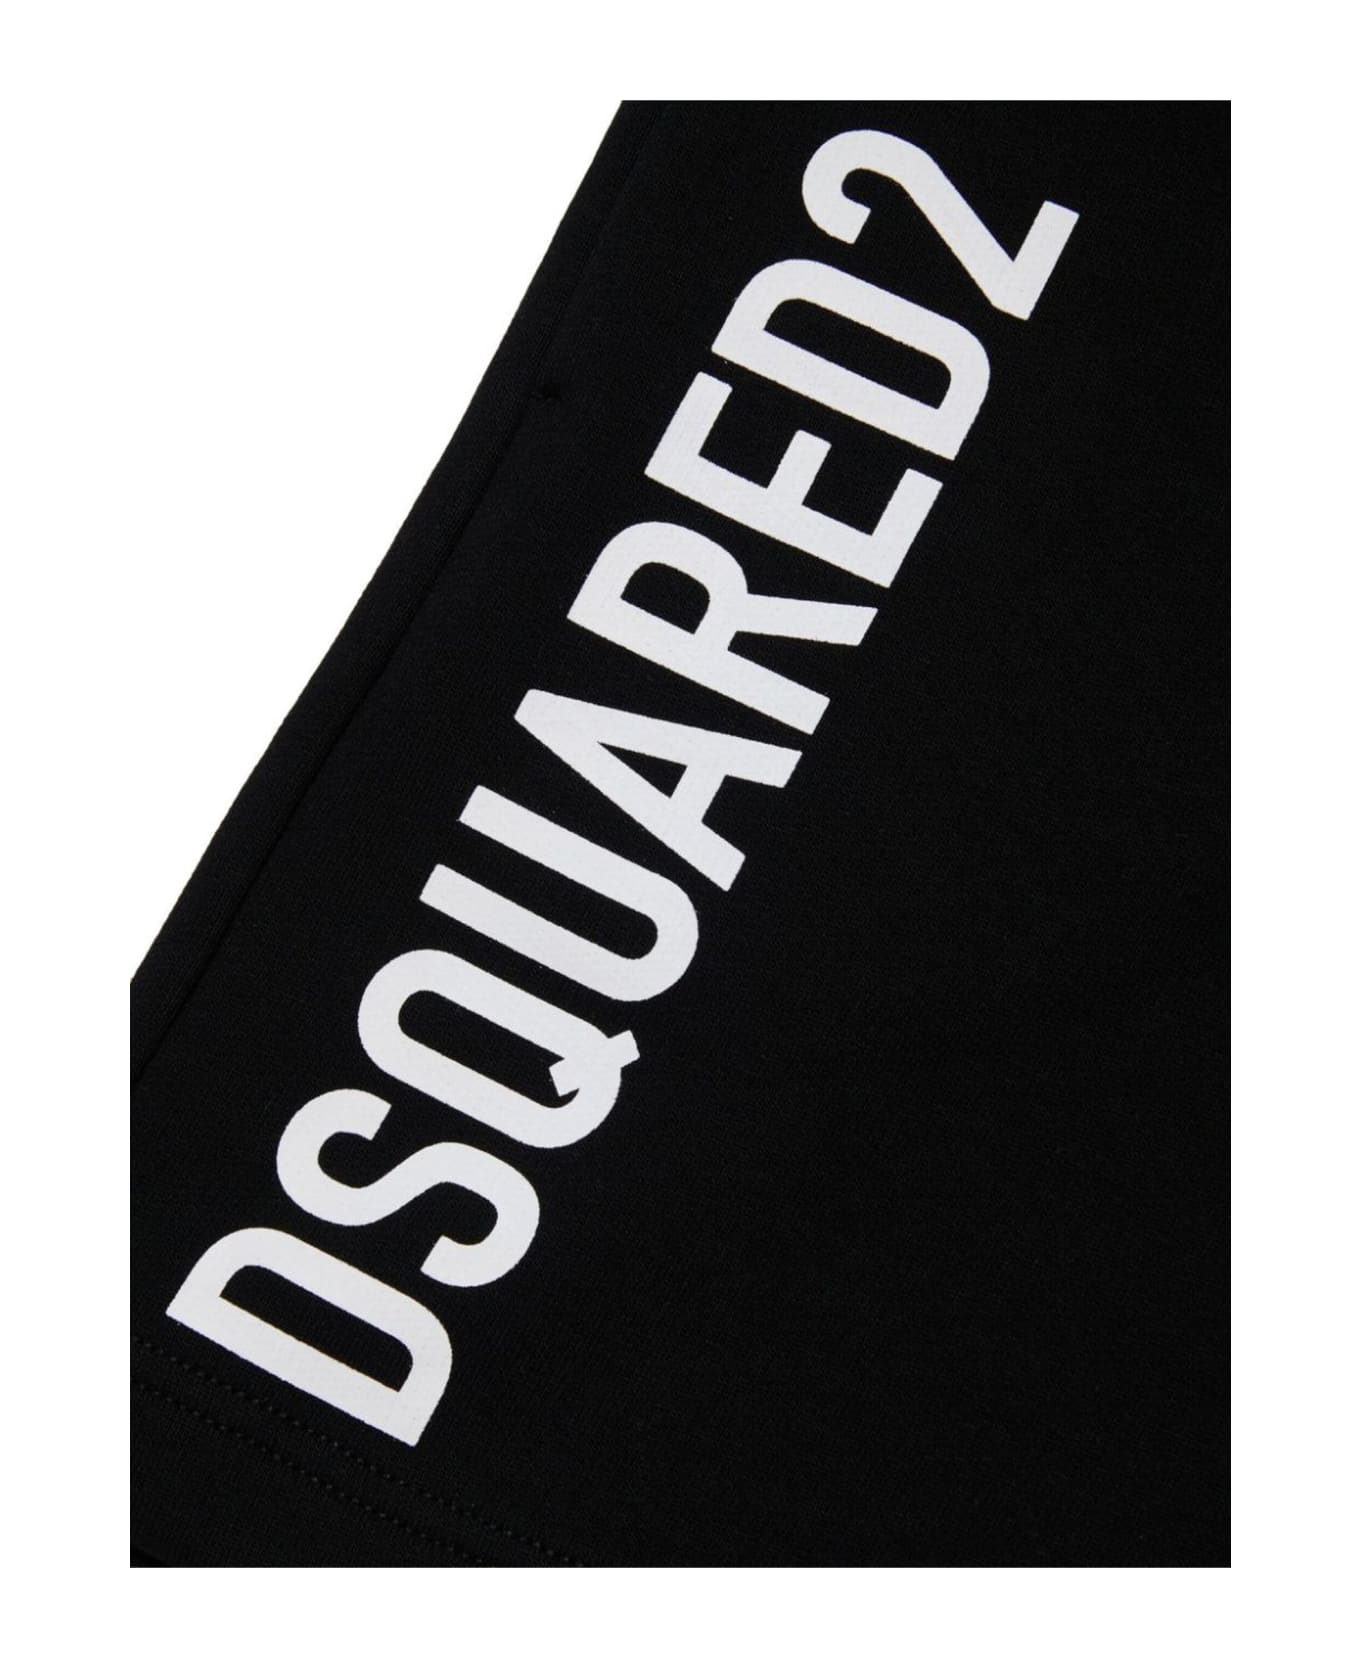 Dsquared2 Shorts Black - Black ボトムス